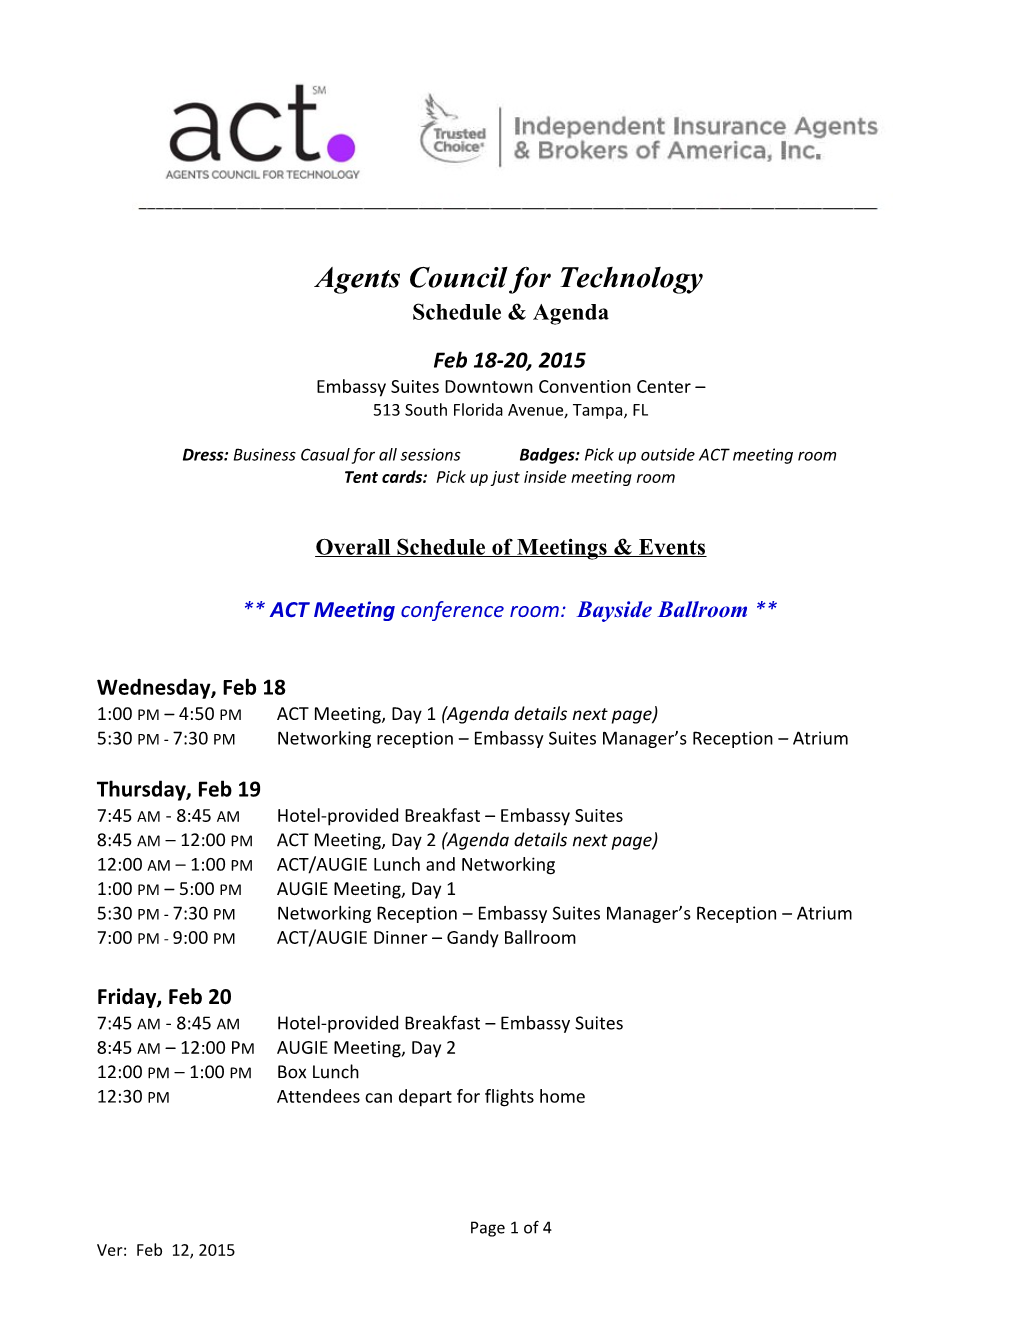 Feb 18-19, 2015 ACT Meeting - Agenda